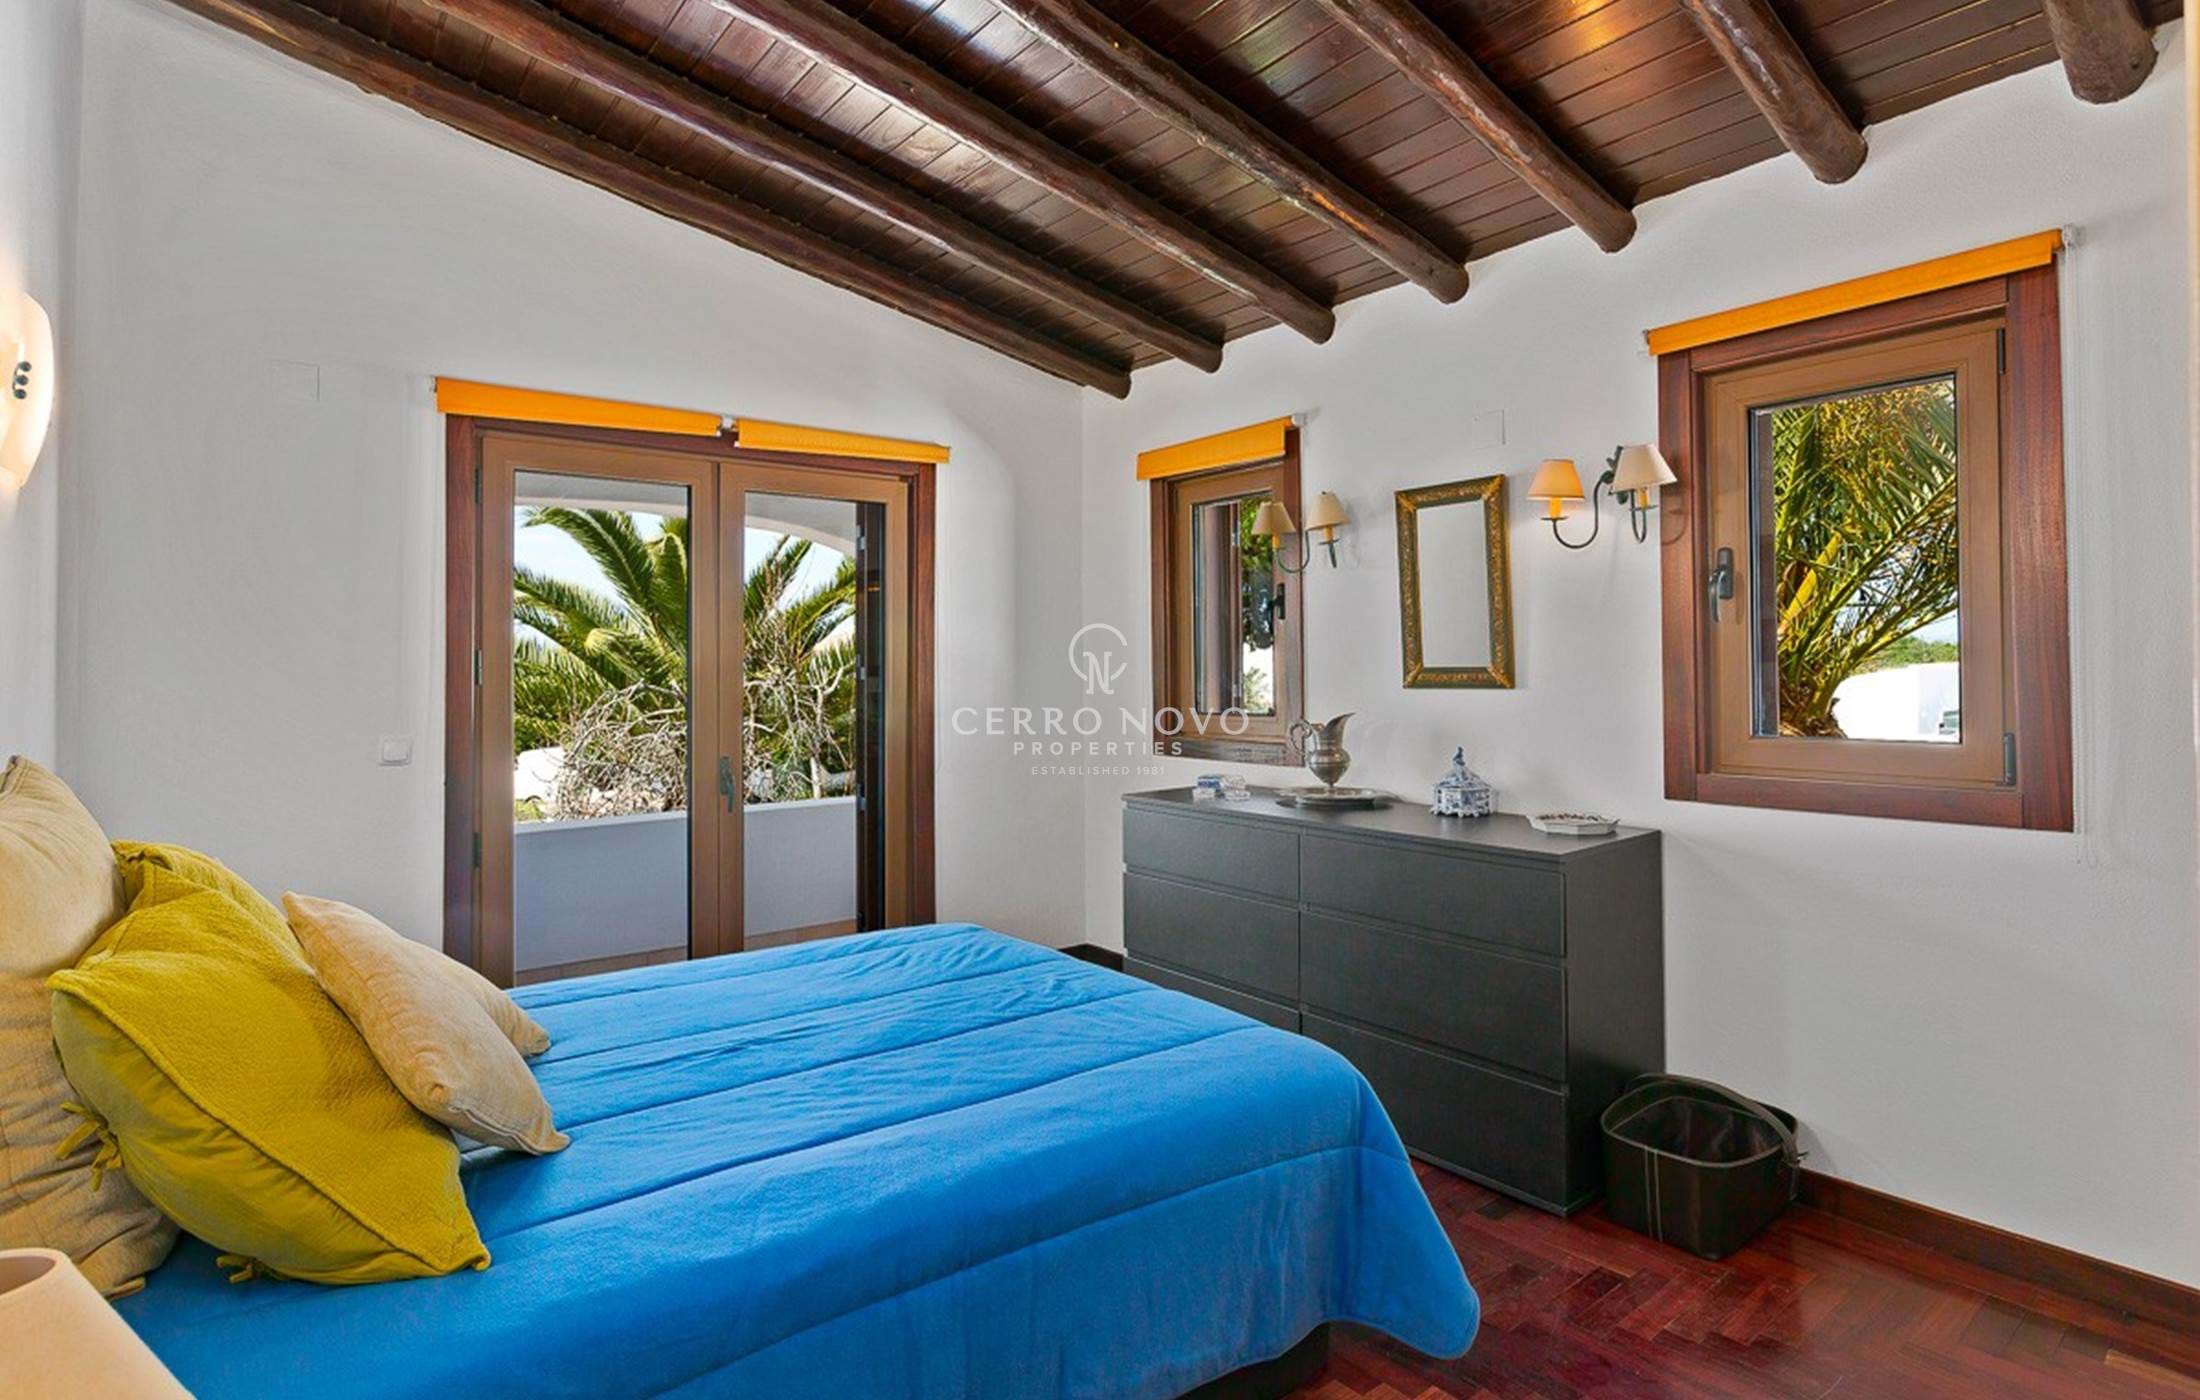 A traditional, Five bedroom semi-detached country villa near Guia